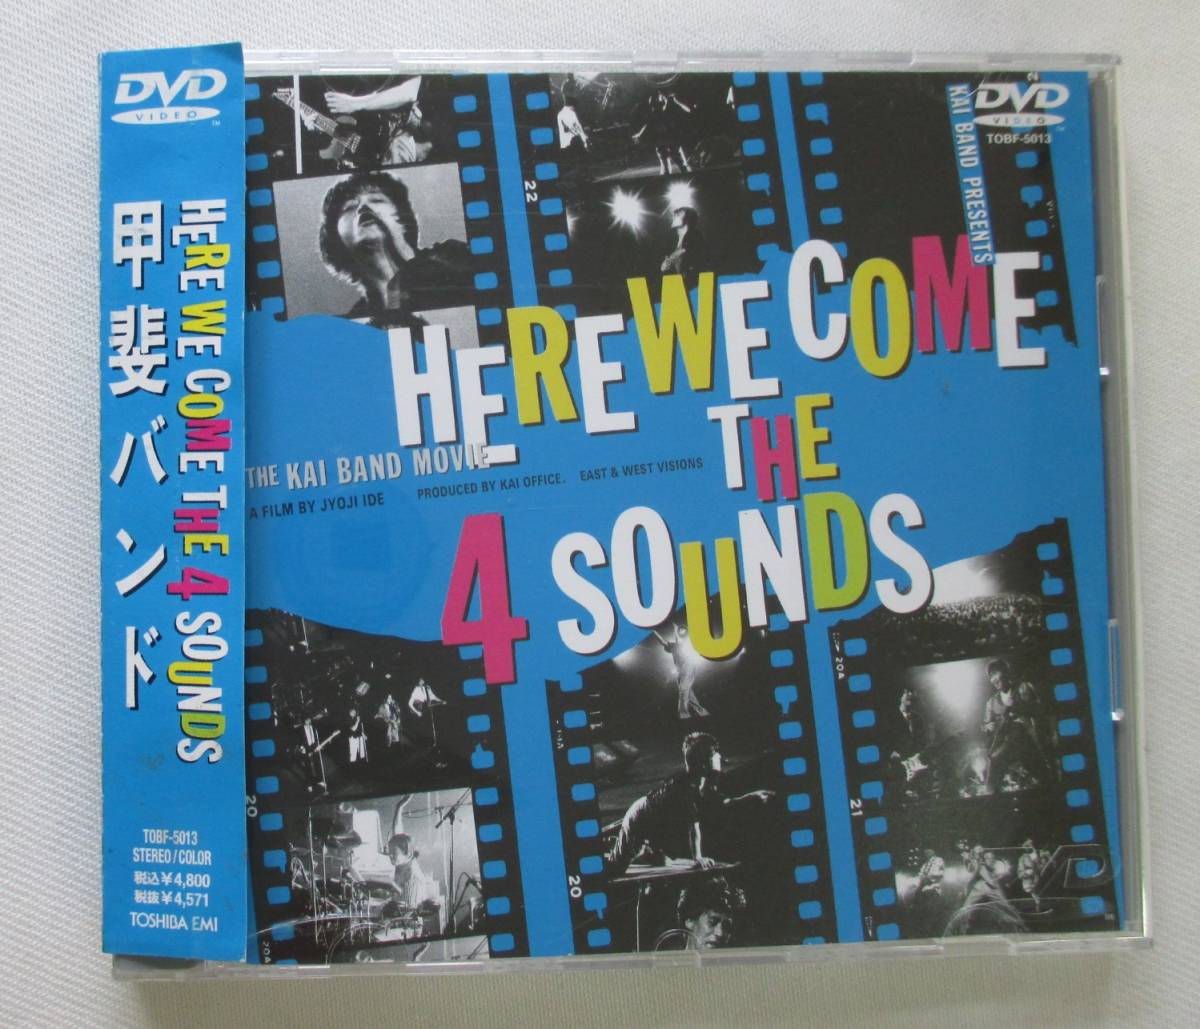 DVD-*R51# Kay Band Here We Come The 4 Sounds Kai Band с лентой #